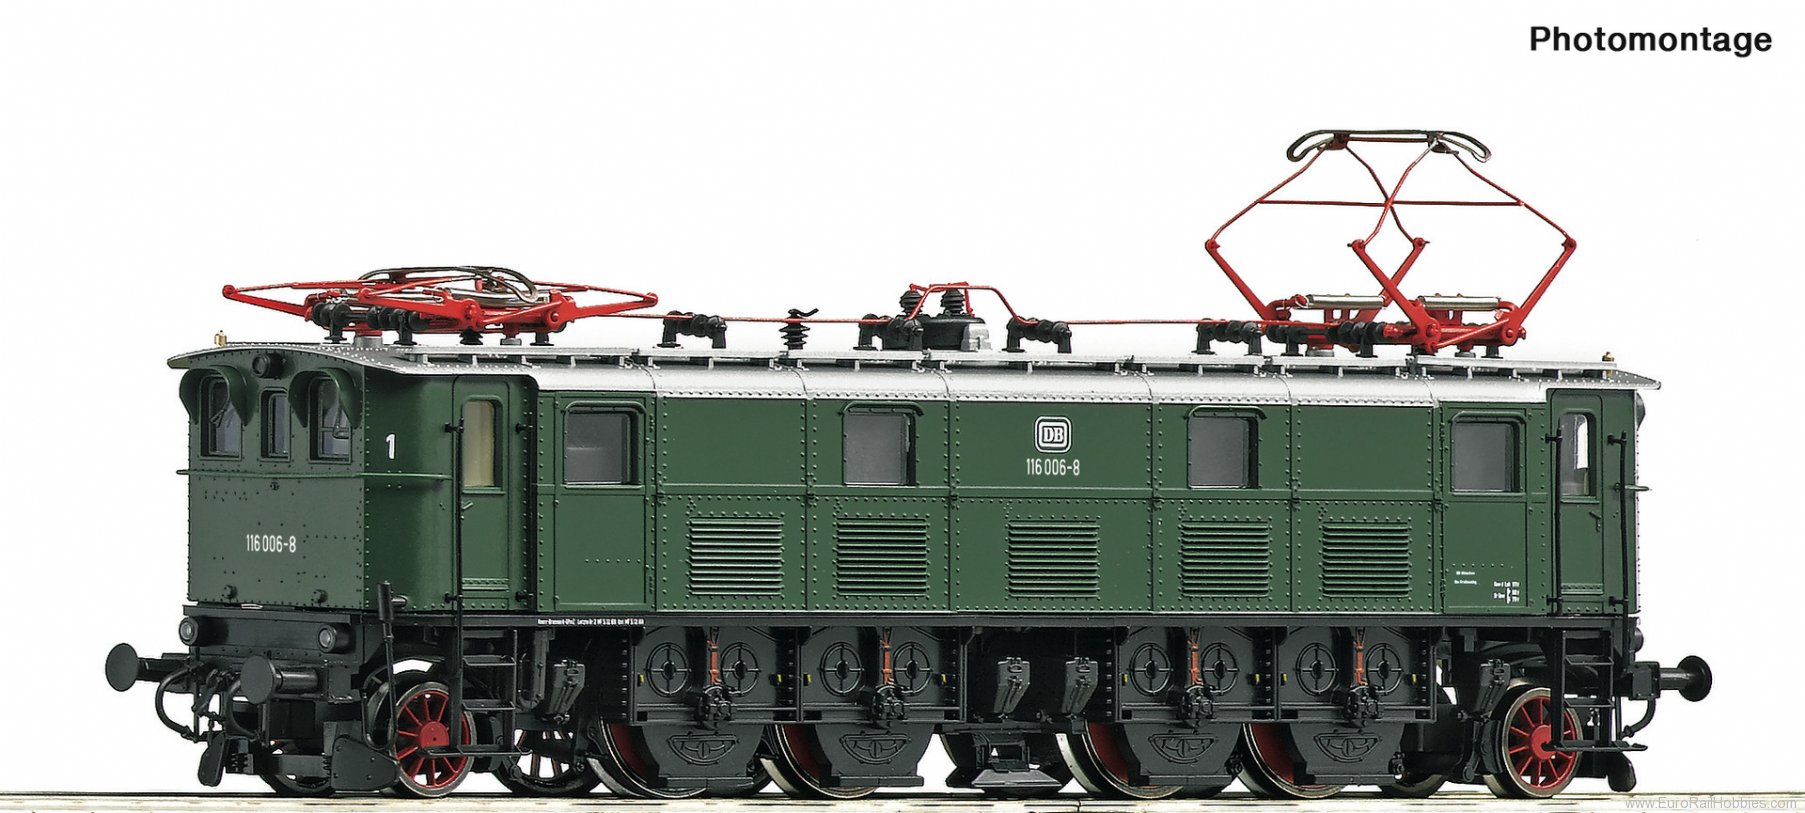 Roco 70463 Electric locomotive 116 006-8, DB (Digital So